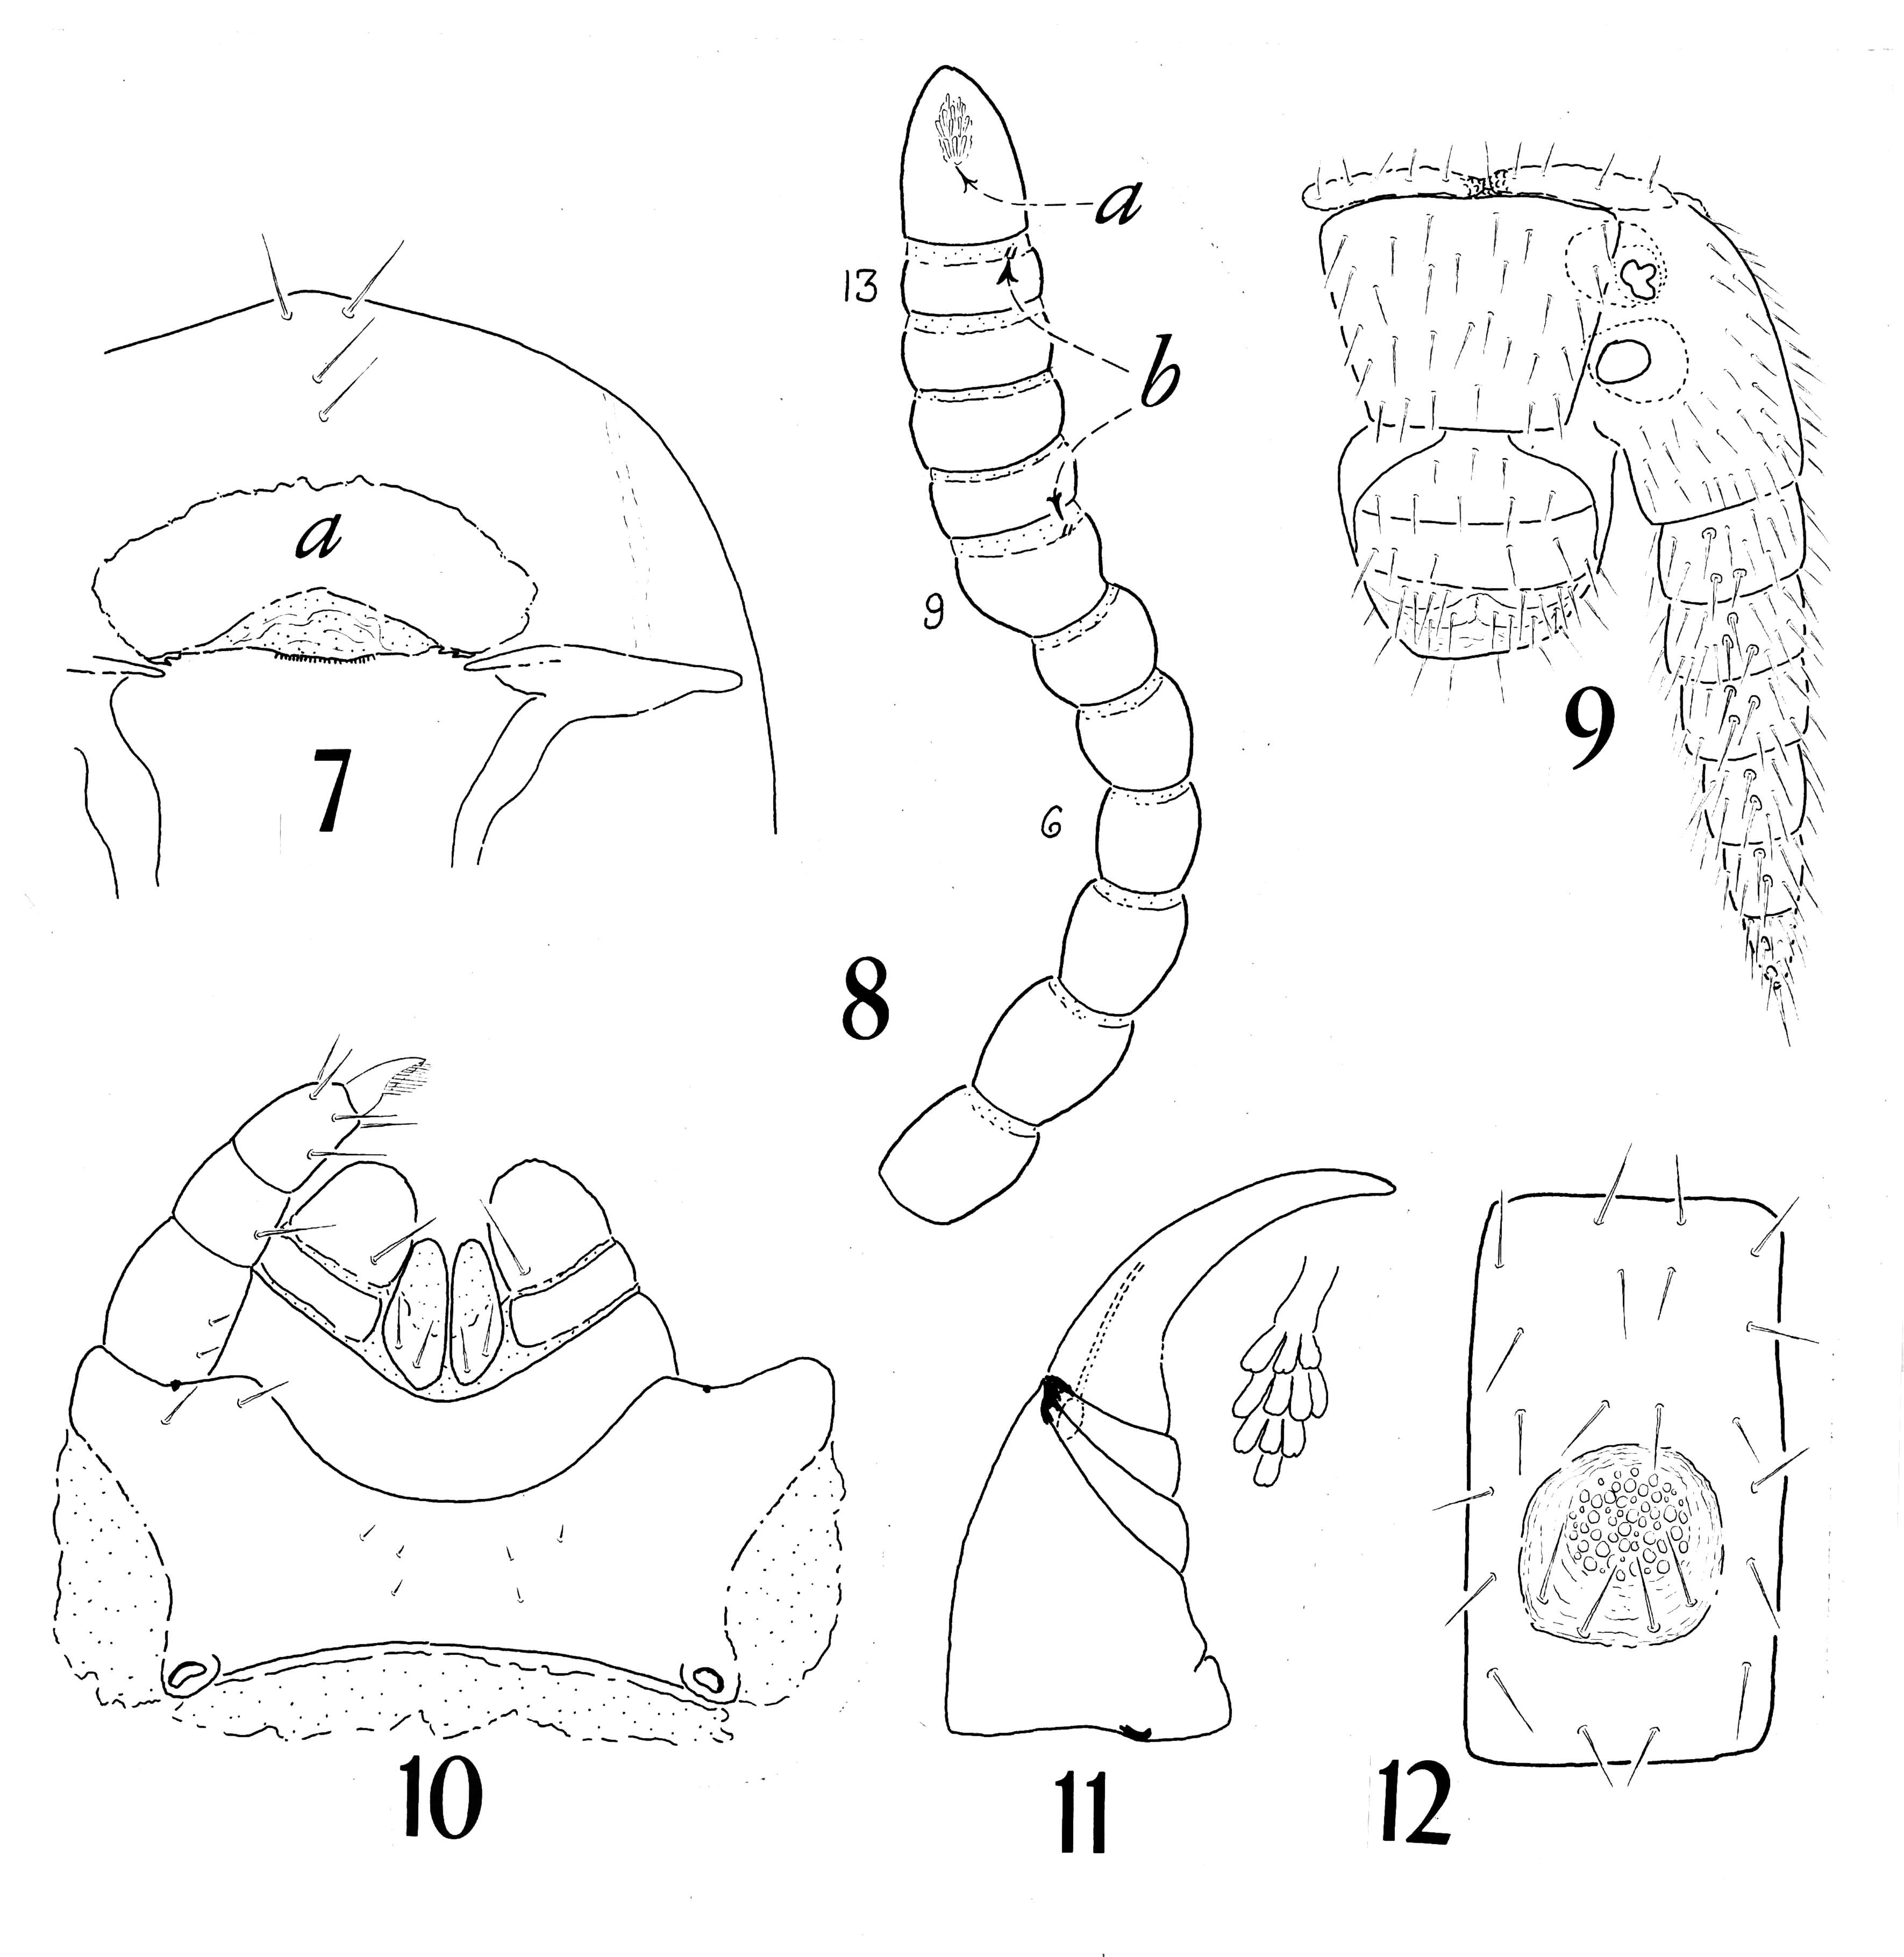 Image of myriapods